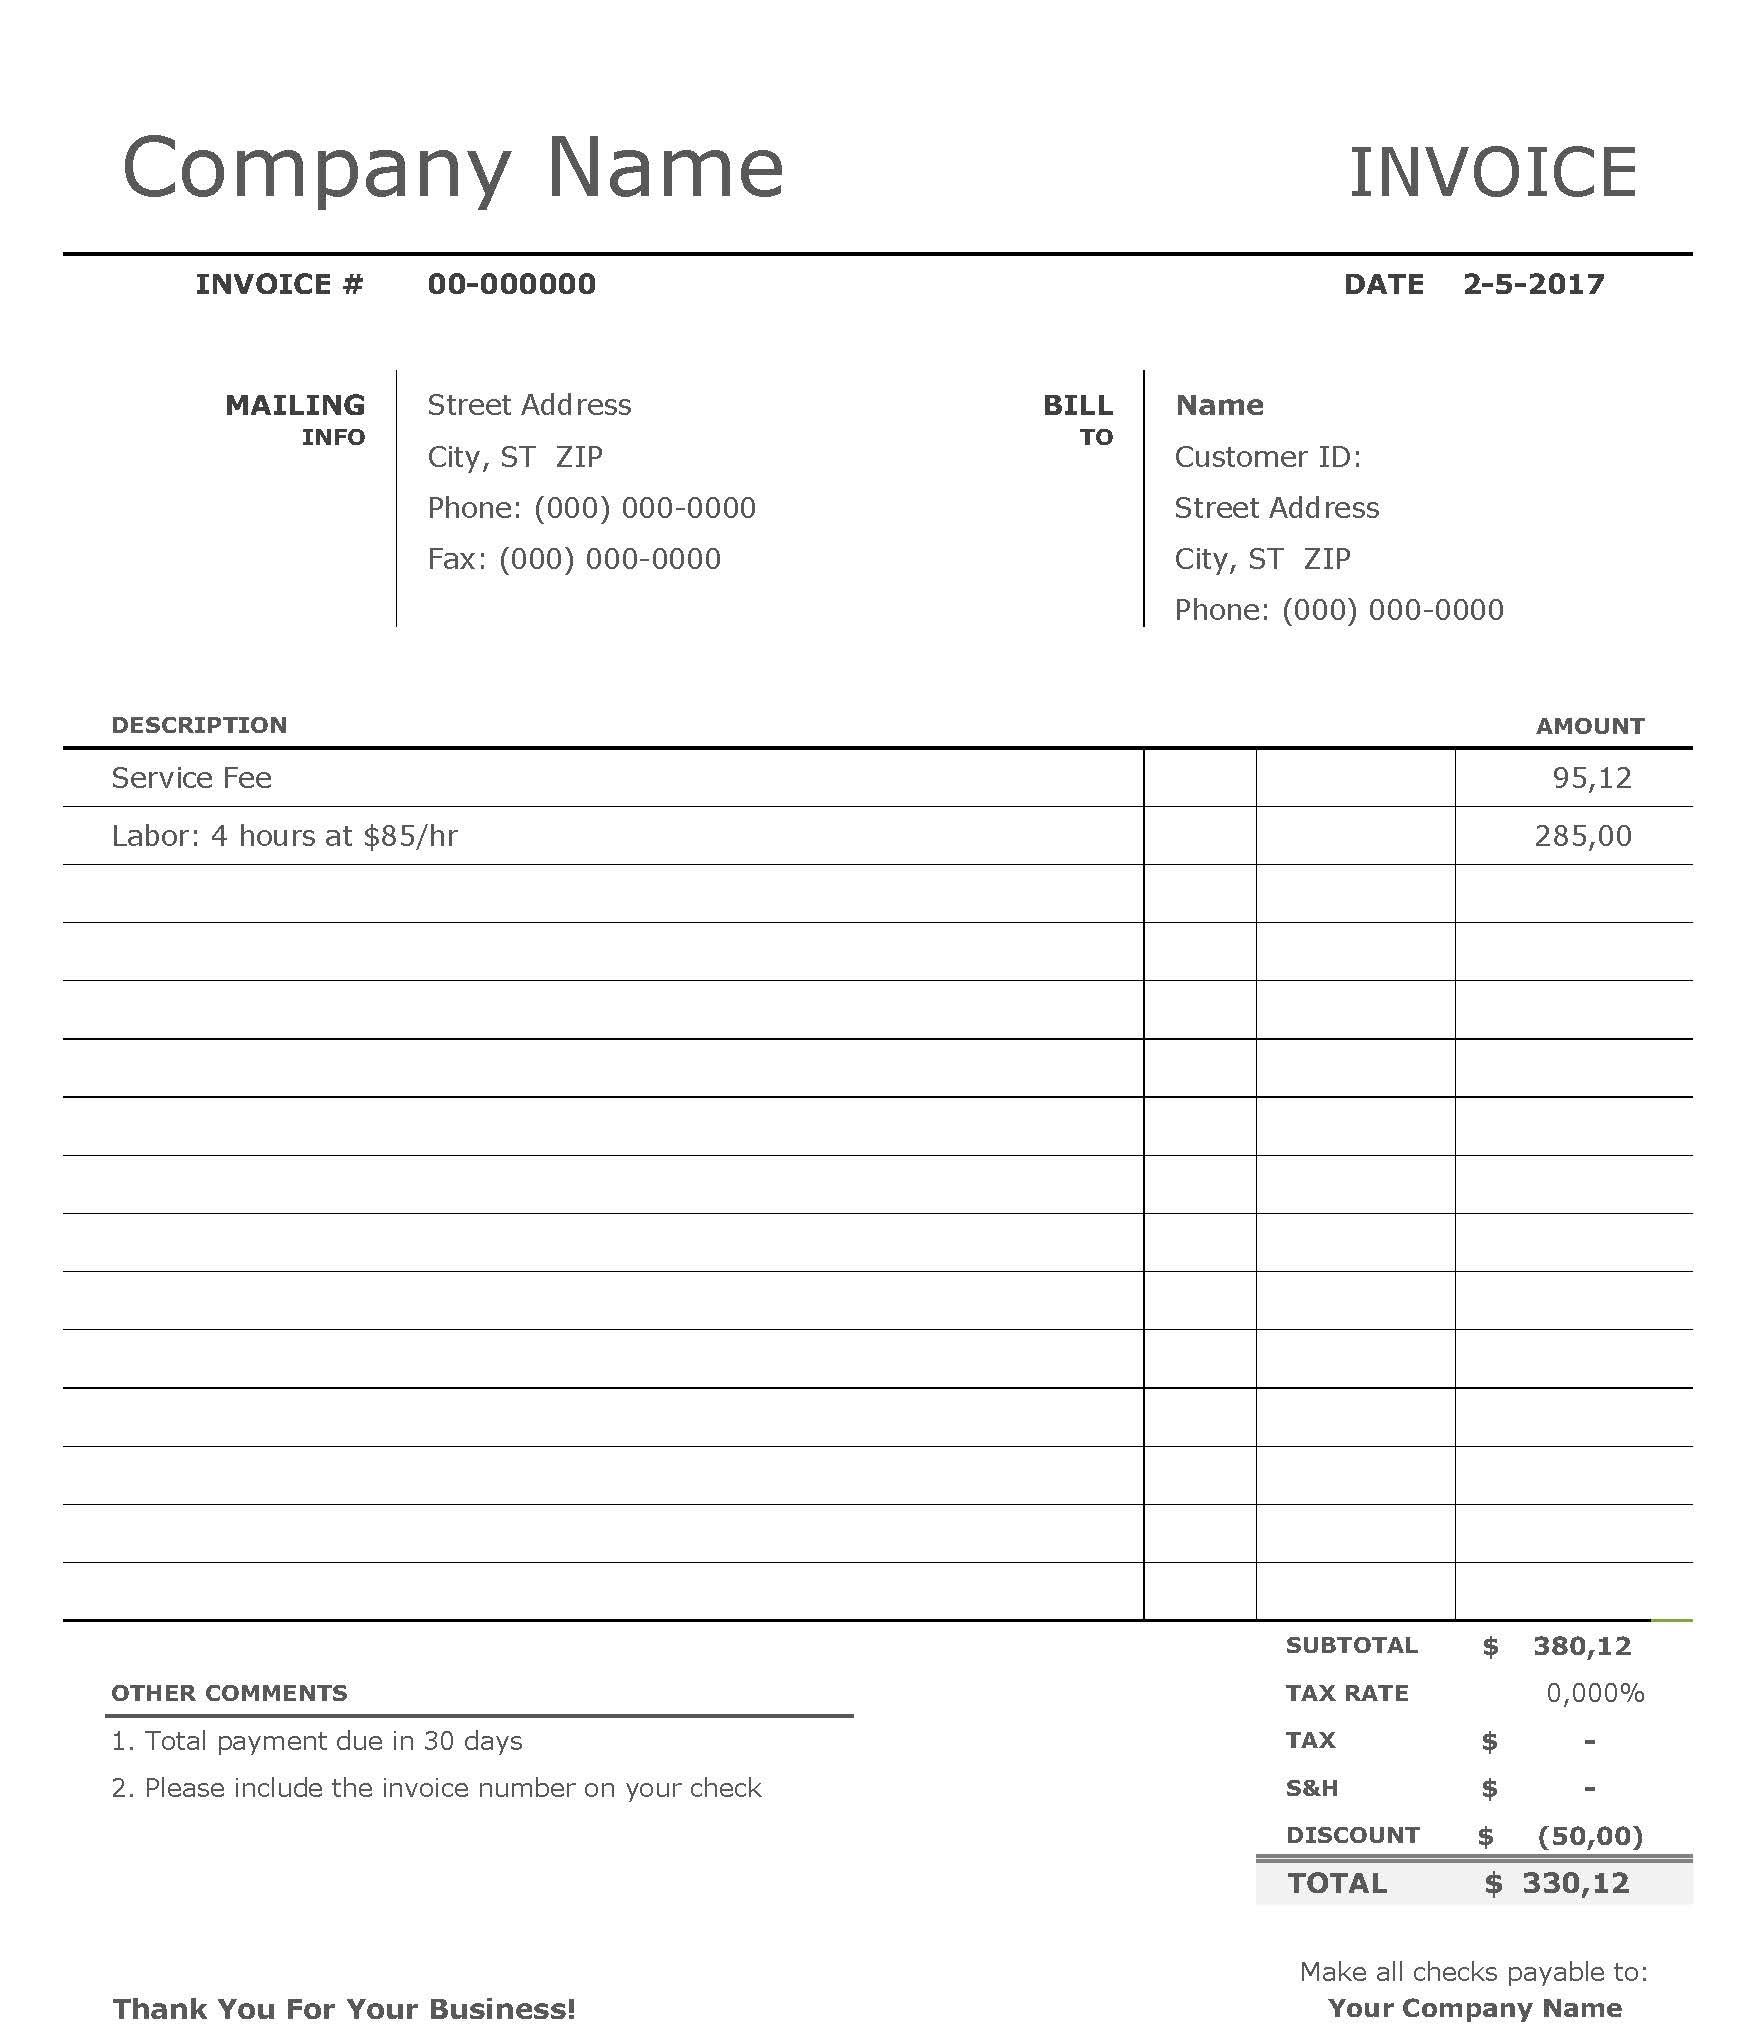 Basic invoice template main image